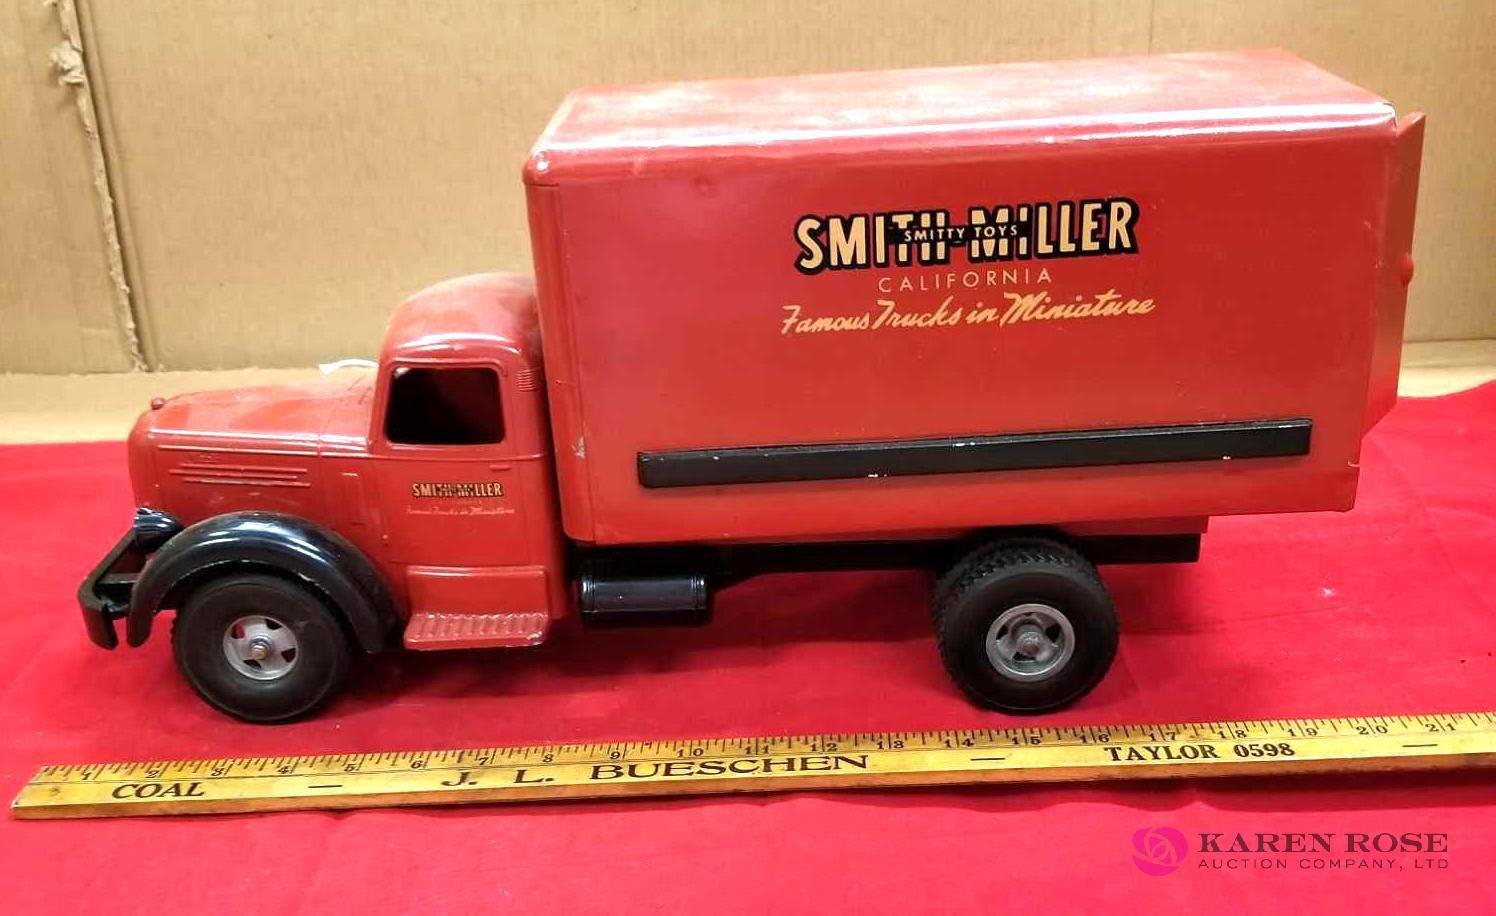 Smith-Miller Truck